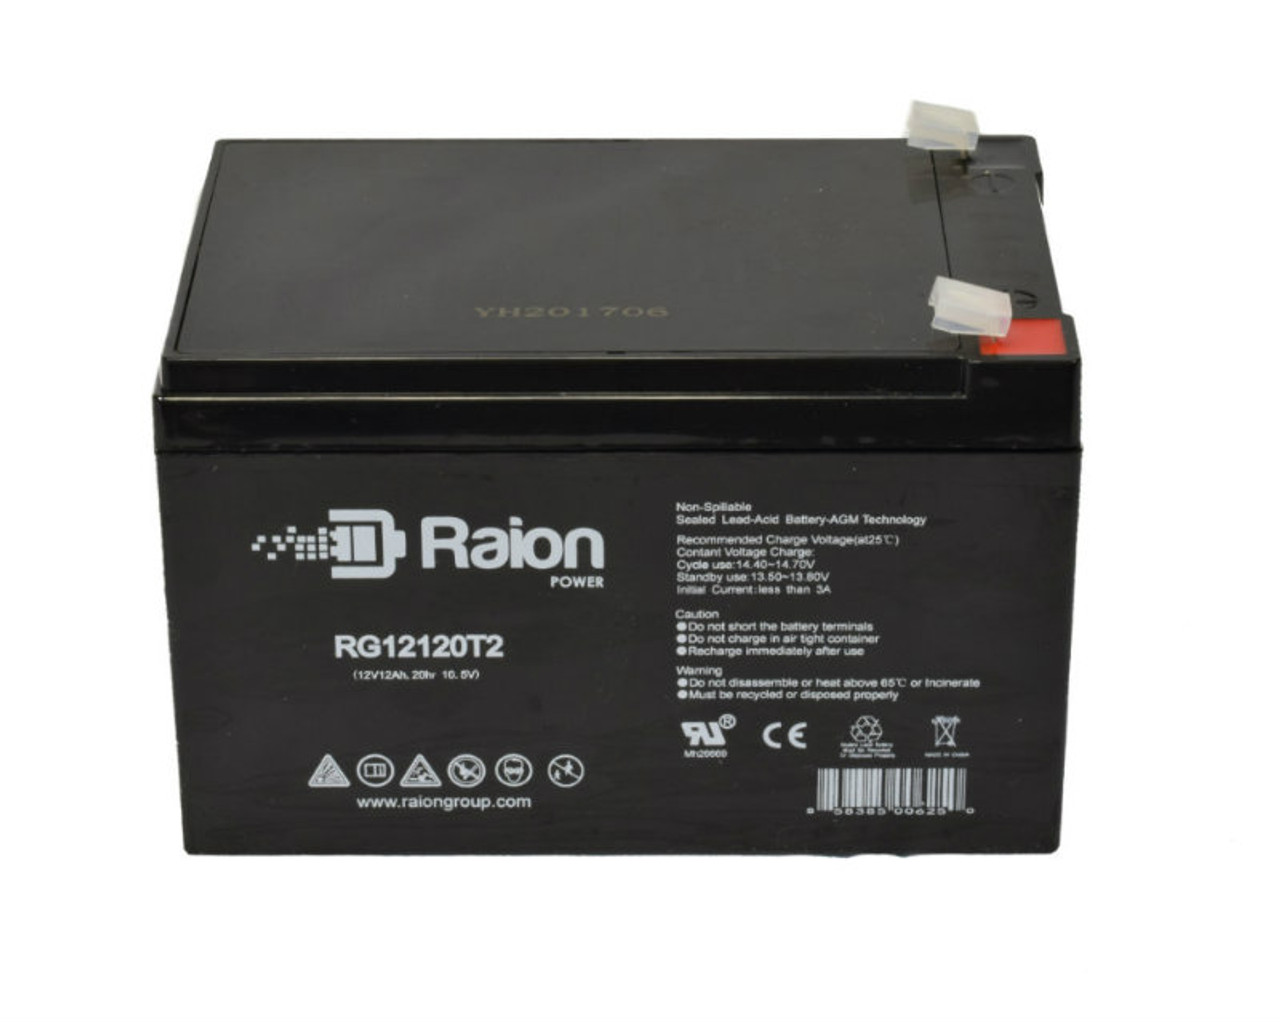 Raion Power RG12120T2 SLA Battery for CSB EVX12120